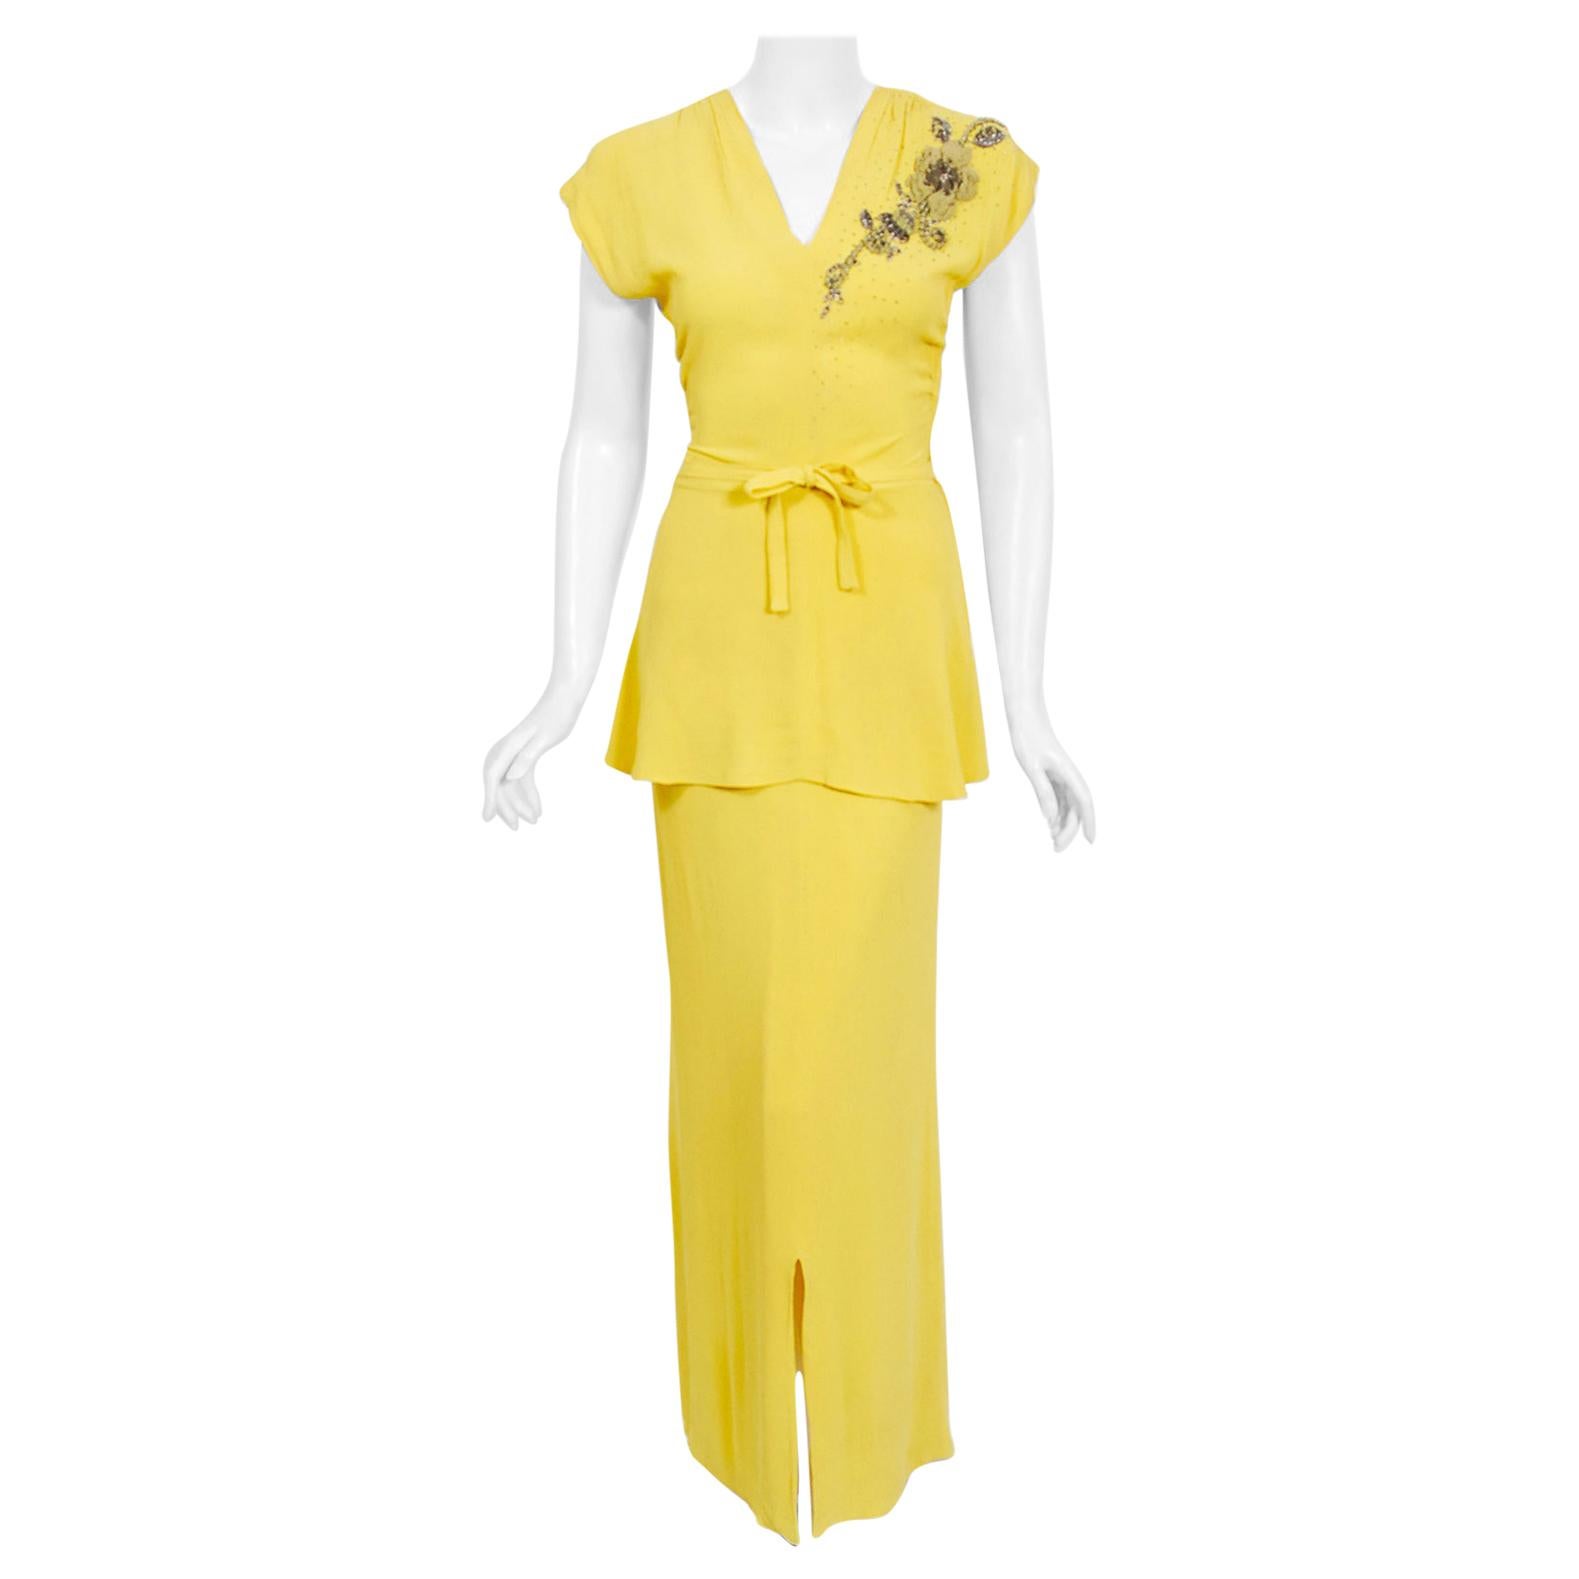 yves saint laurent evening dress of bright pink and lemon yellow silk crepe